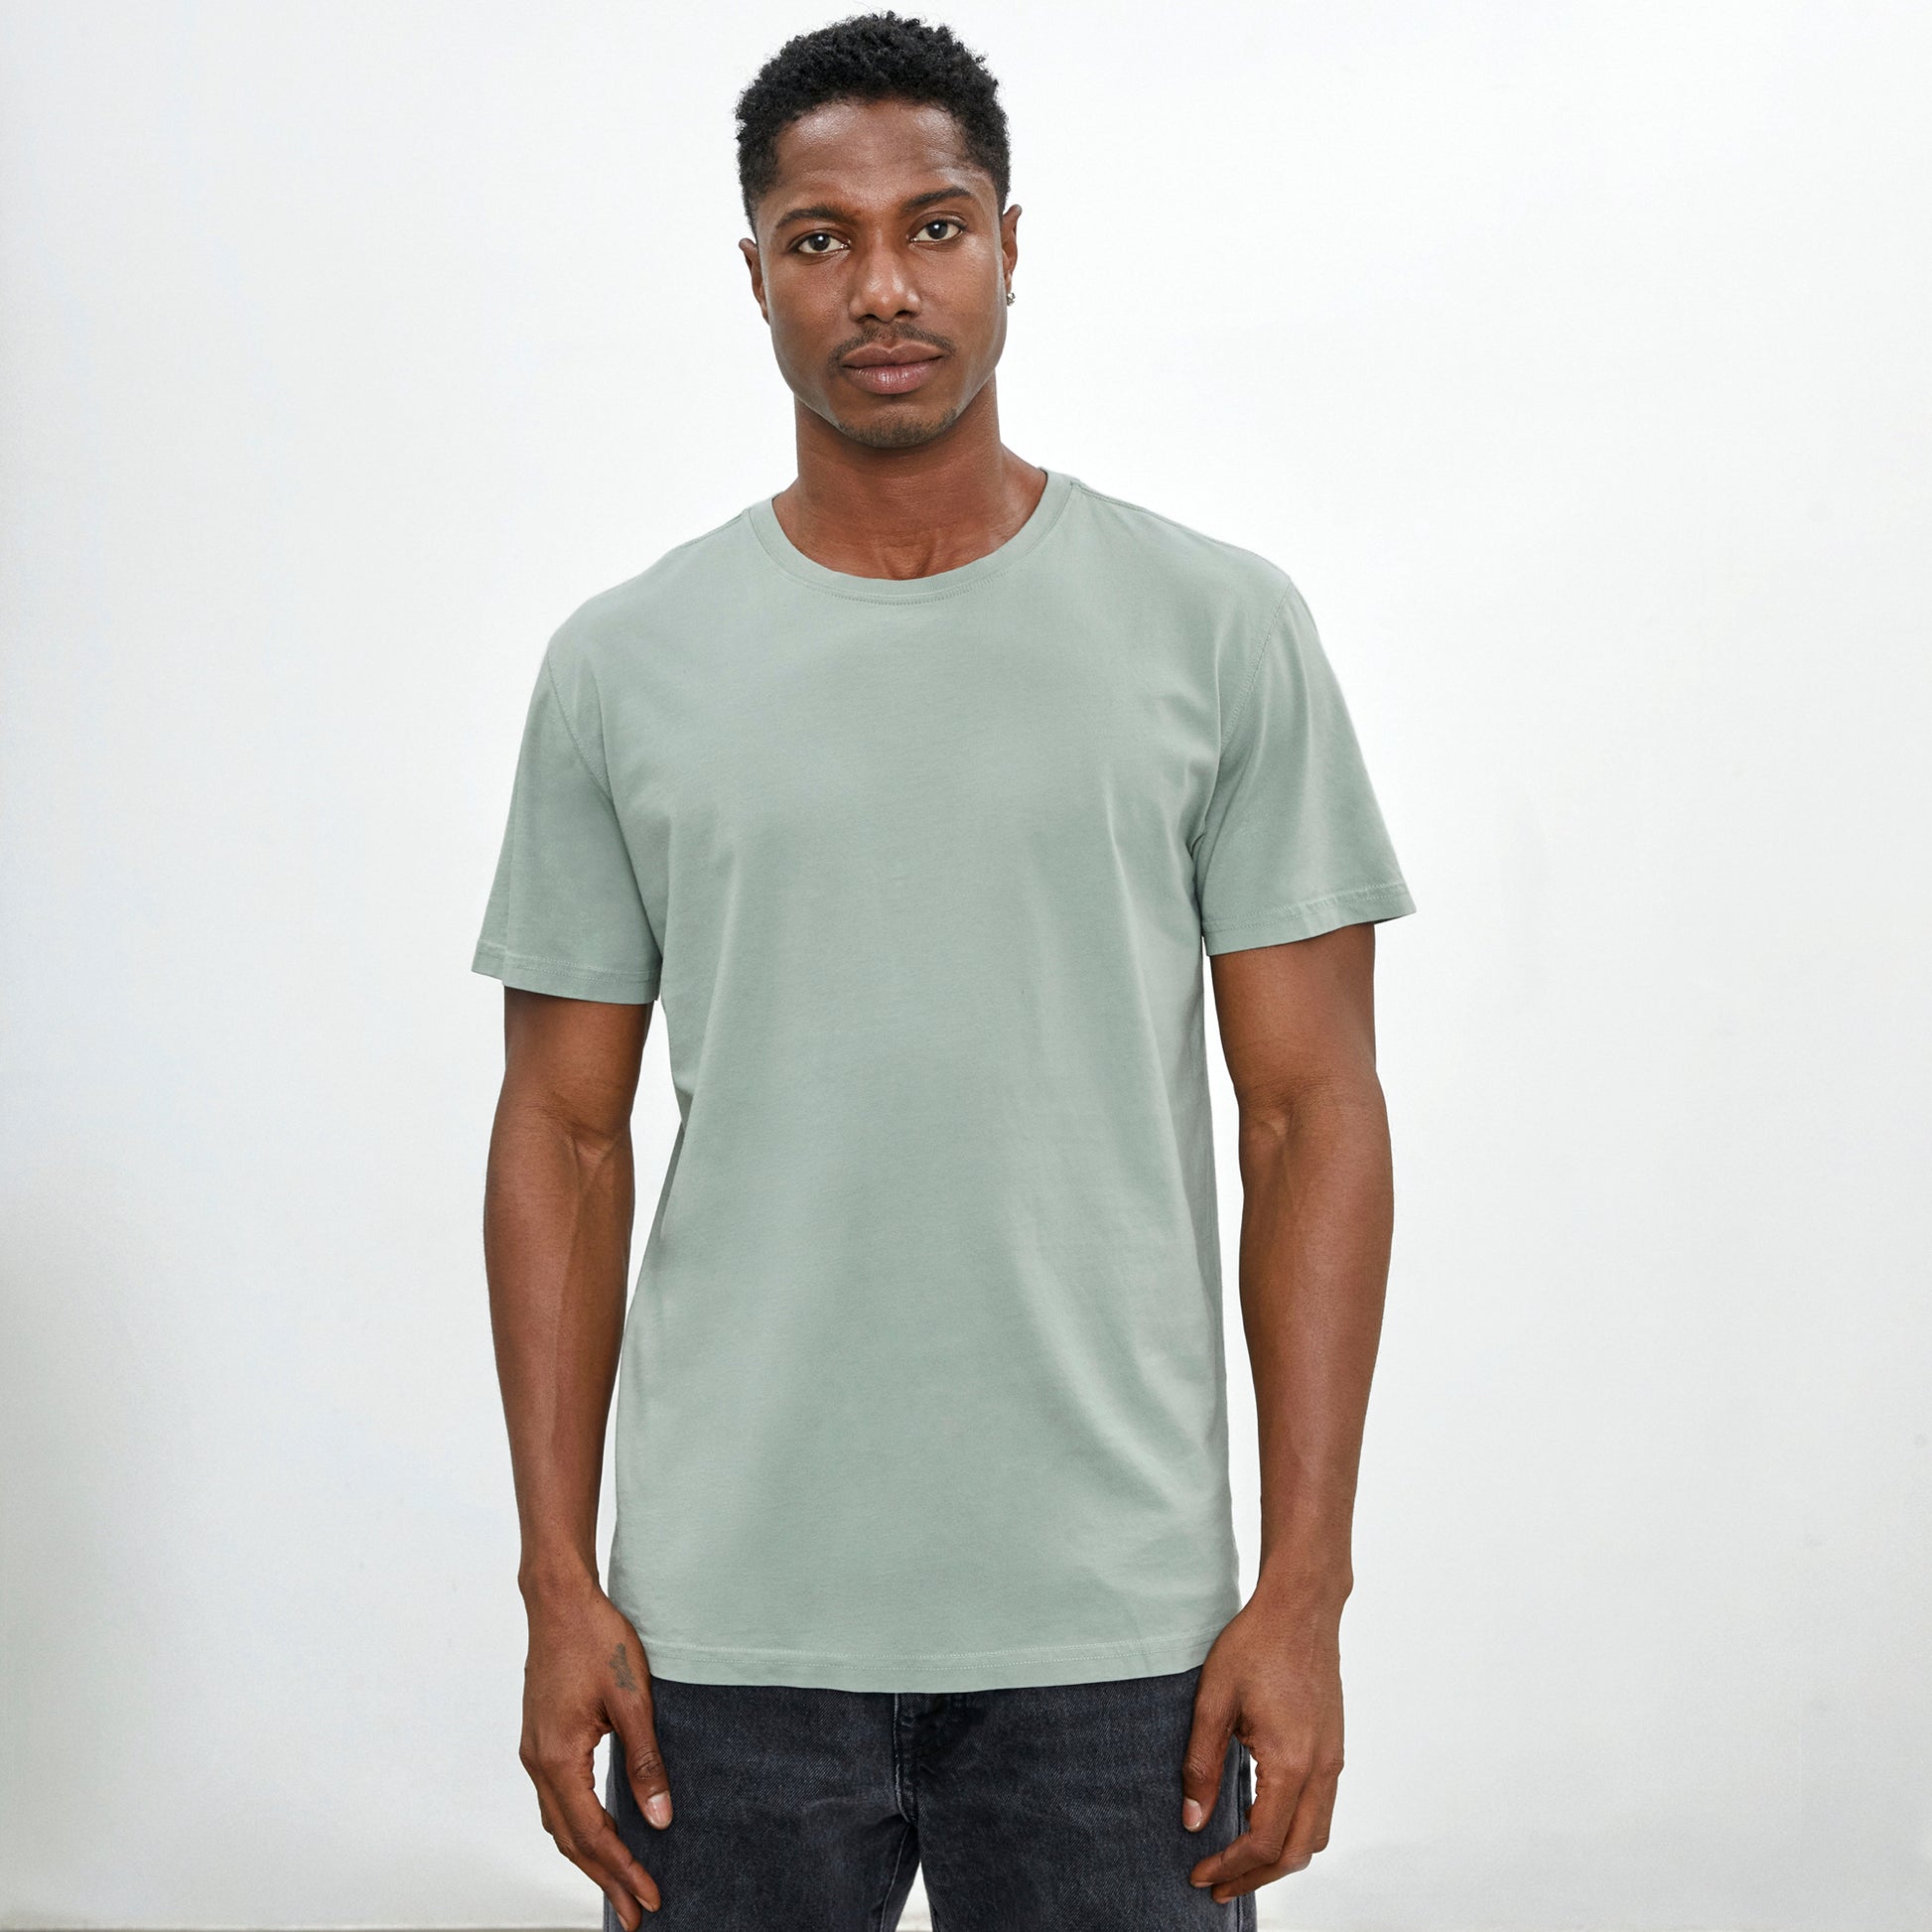 Polo verde marino de cuello redondo y manga corta de algodón Pima, vista frontal con modelo